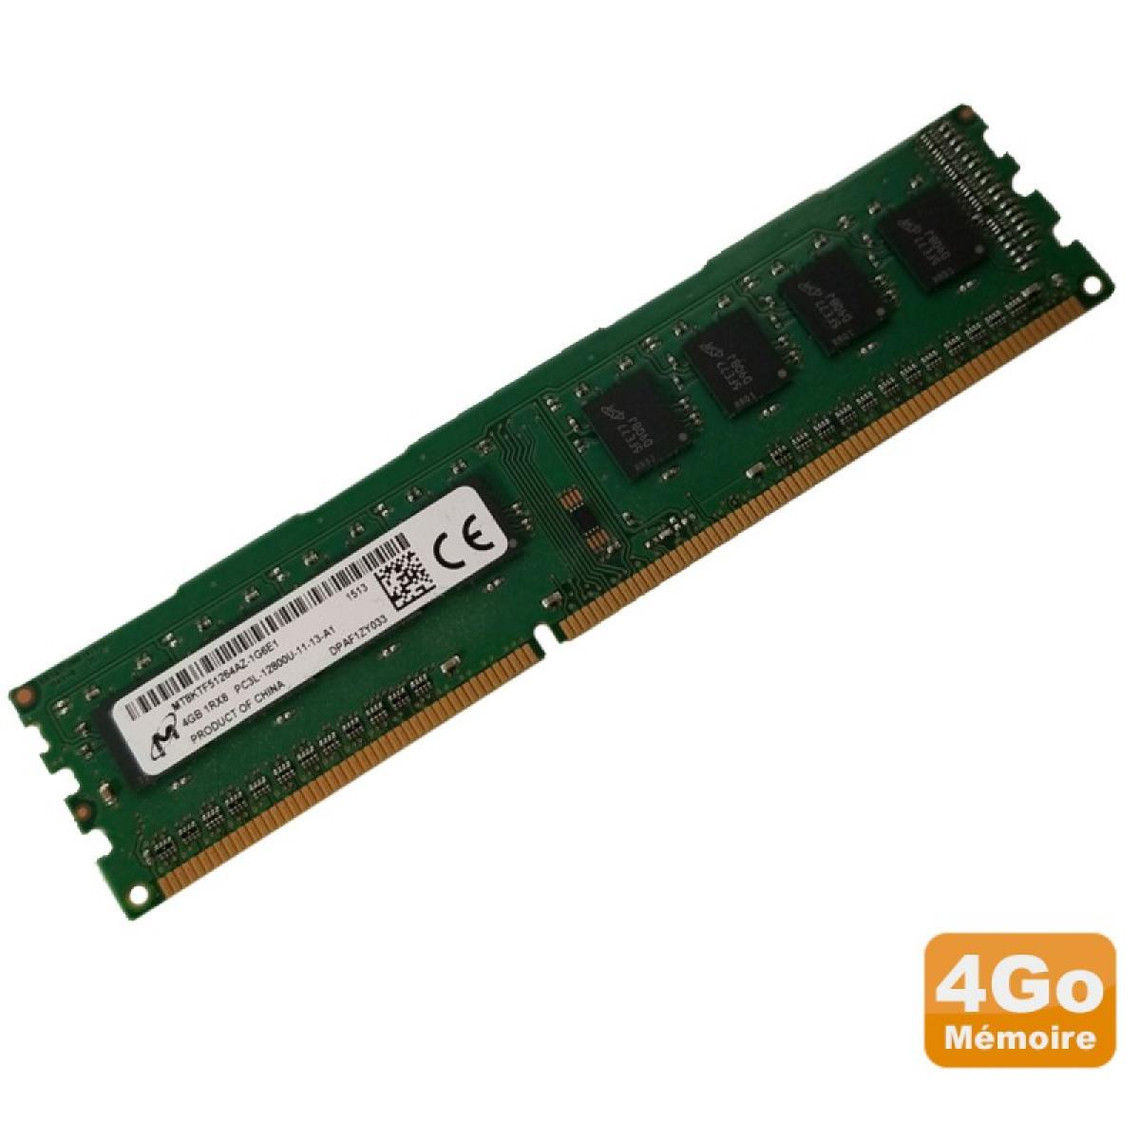 RAM PC Micron Tech 4Go RAM PC Bureau MICRON MT8KTF51264AZ-1G6E1 DDR3 PC3-12800U 1Rx8 1600Mhz CL11